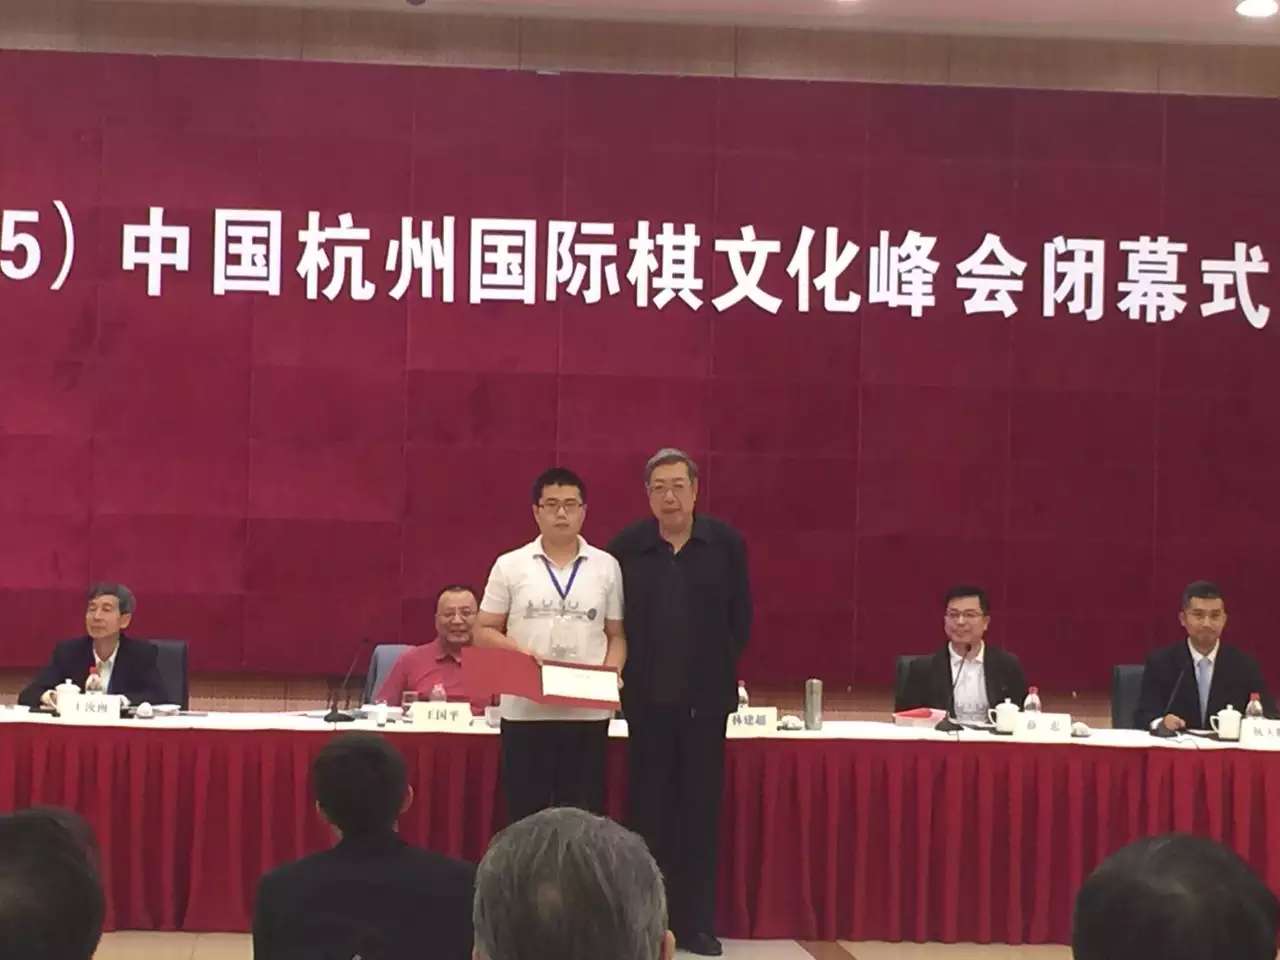 Wang Ge receiving an award at the2015 Hangzhou Chess Conference